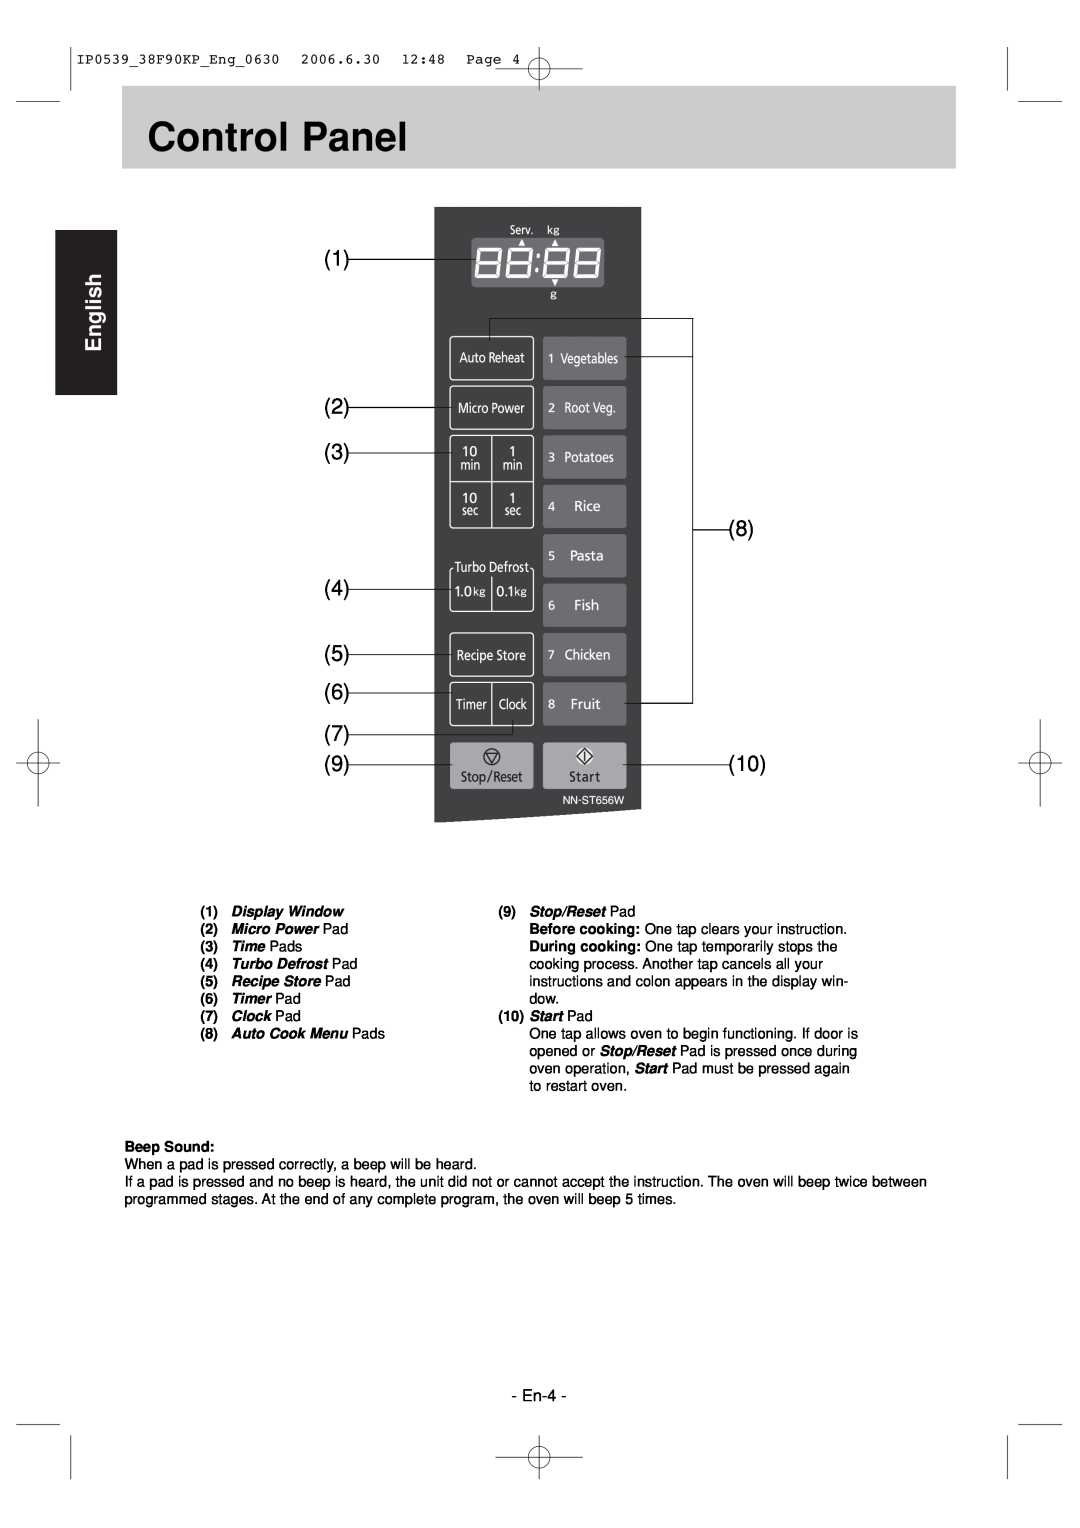 Panasonic NN-ST686S operating instructions Control Panel, En-4, English, Beep Sound 